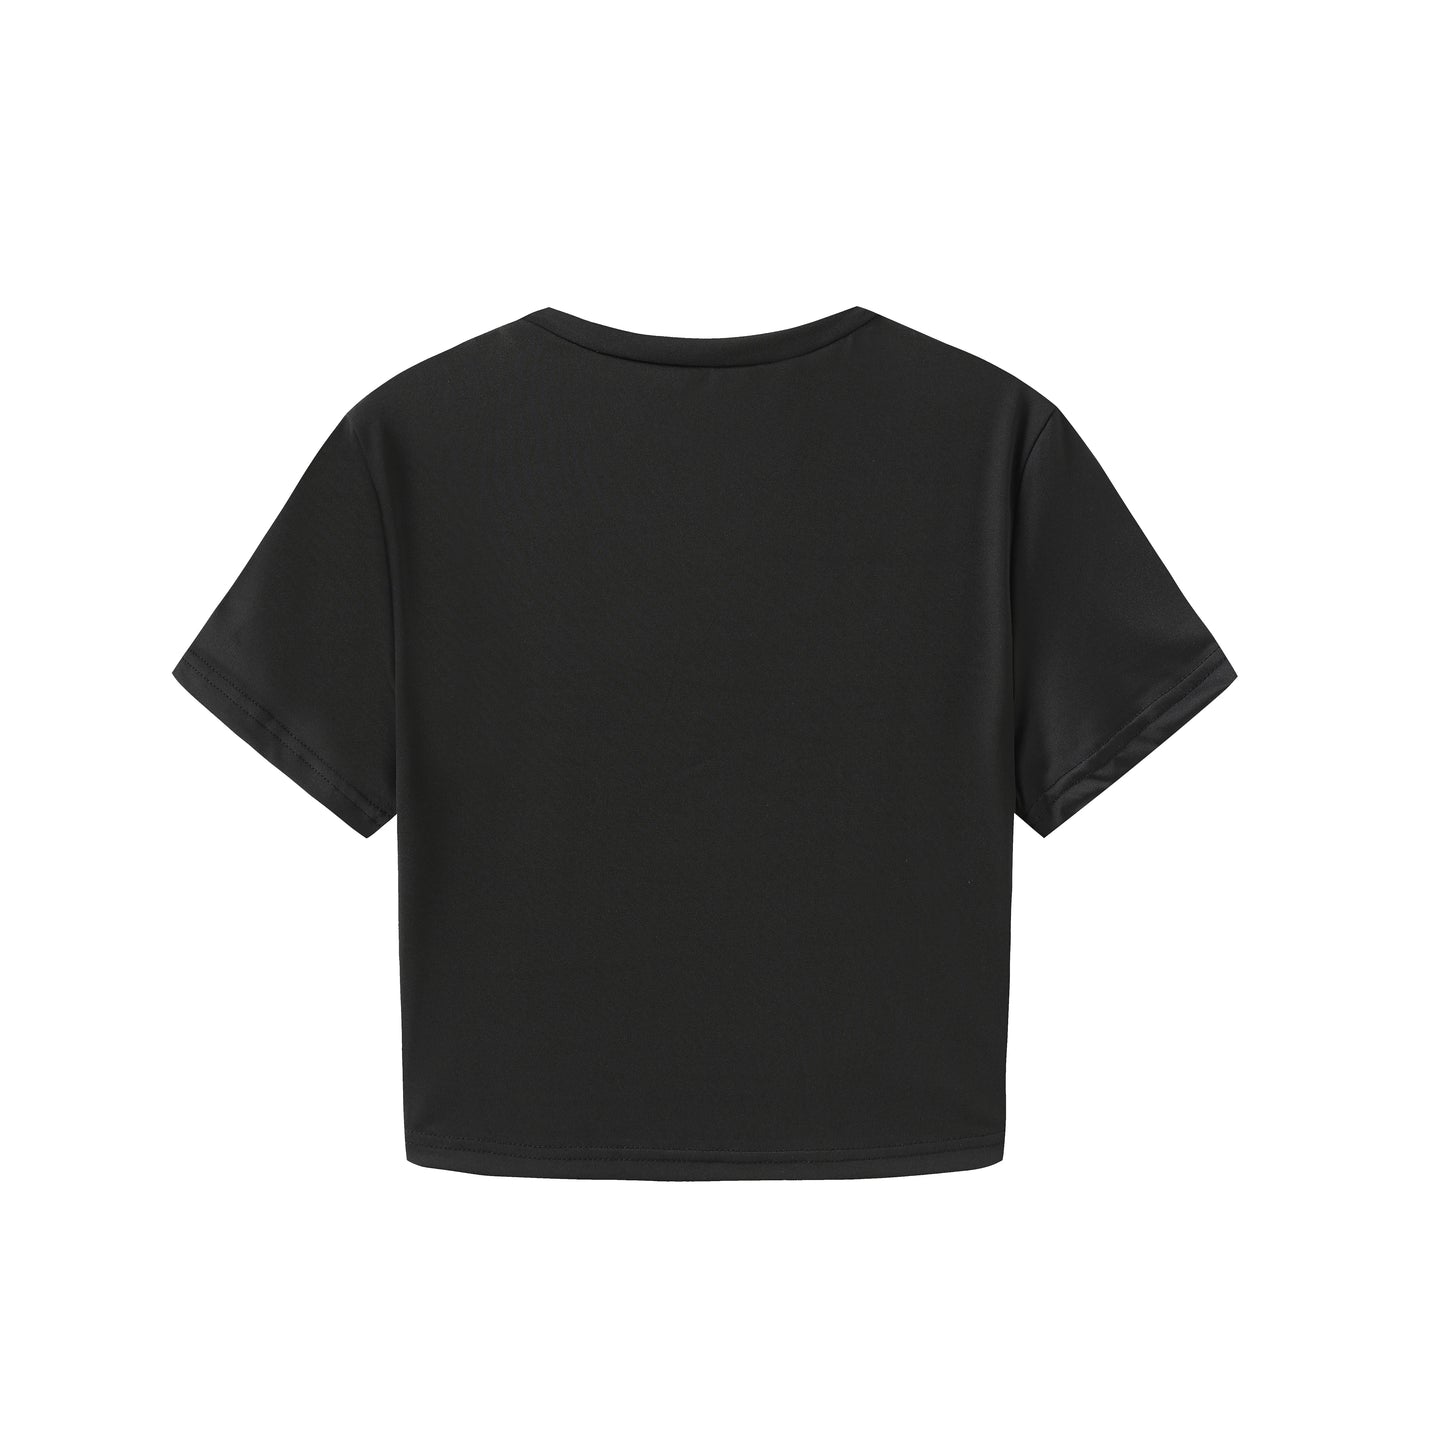 Gothic dark women's t-shirt, punk black pattern short sleeved top